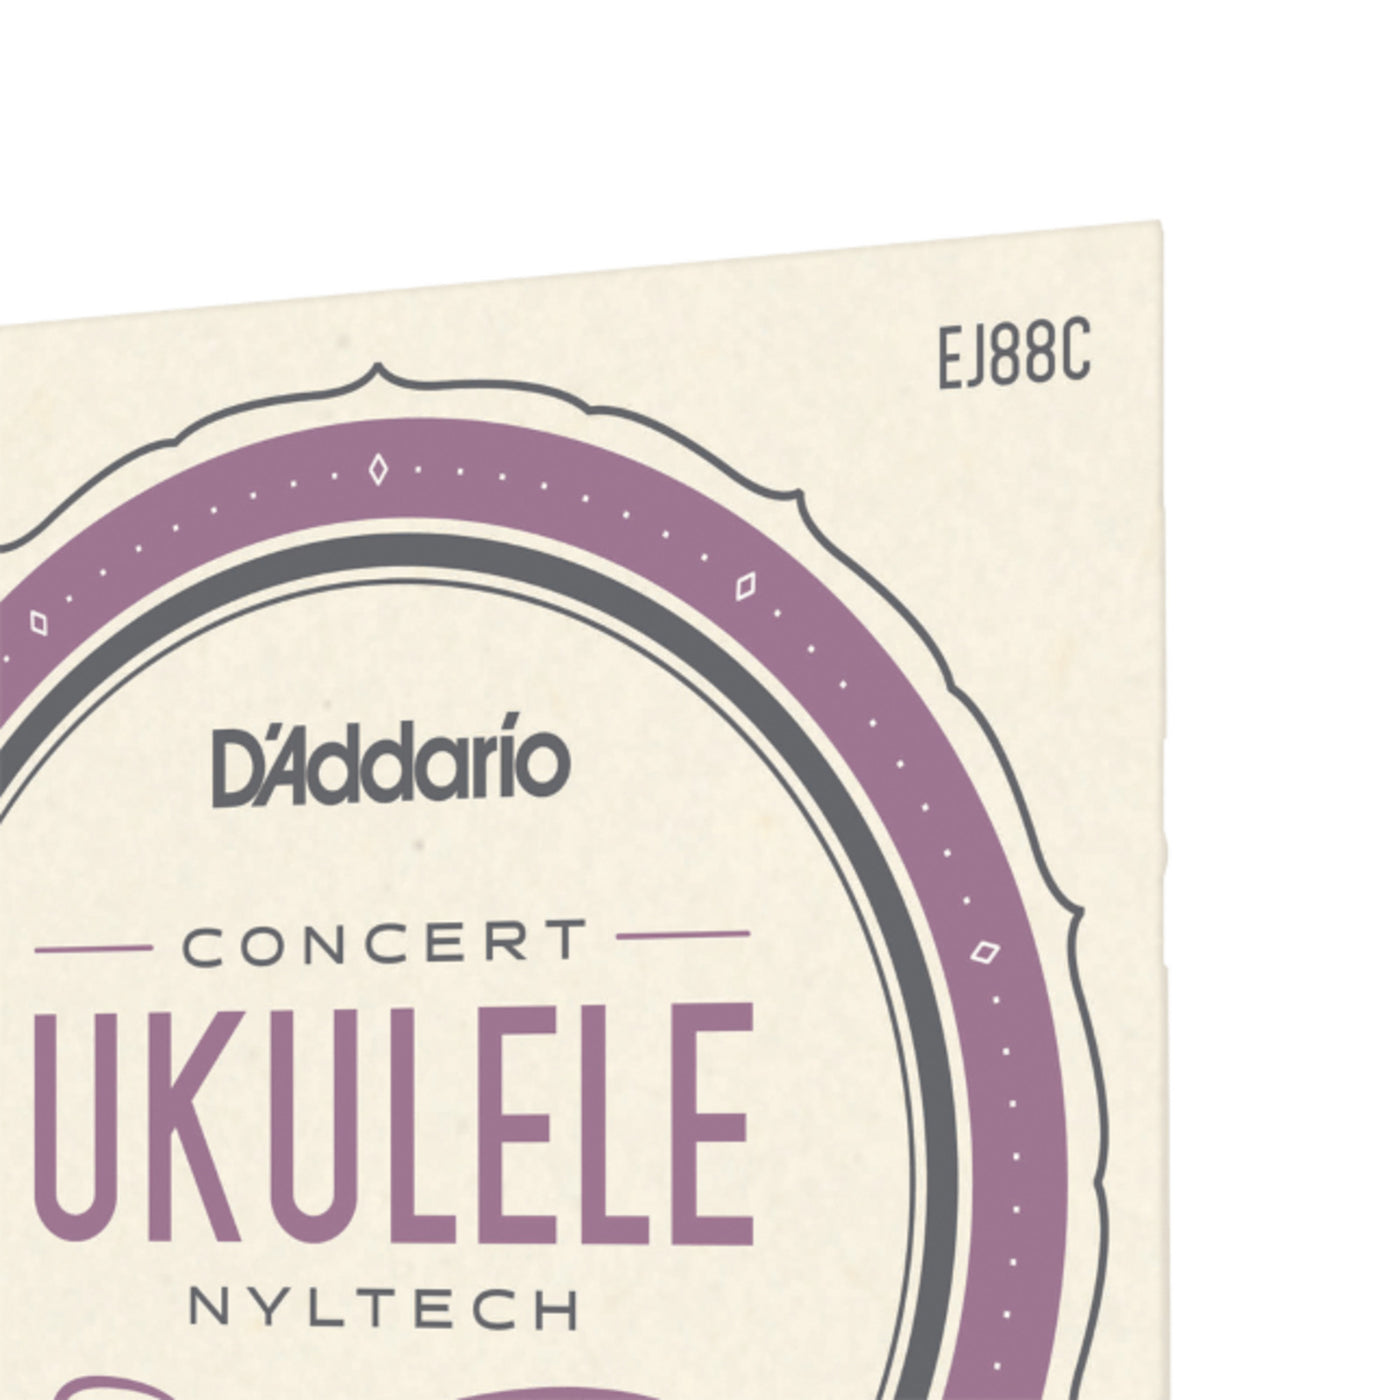 D'Addario Nyltech Ukulele Strings, Concert (EJ88C)